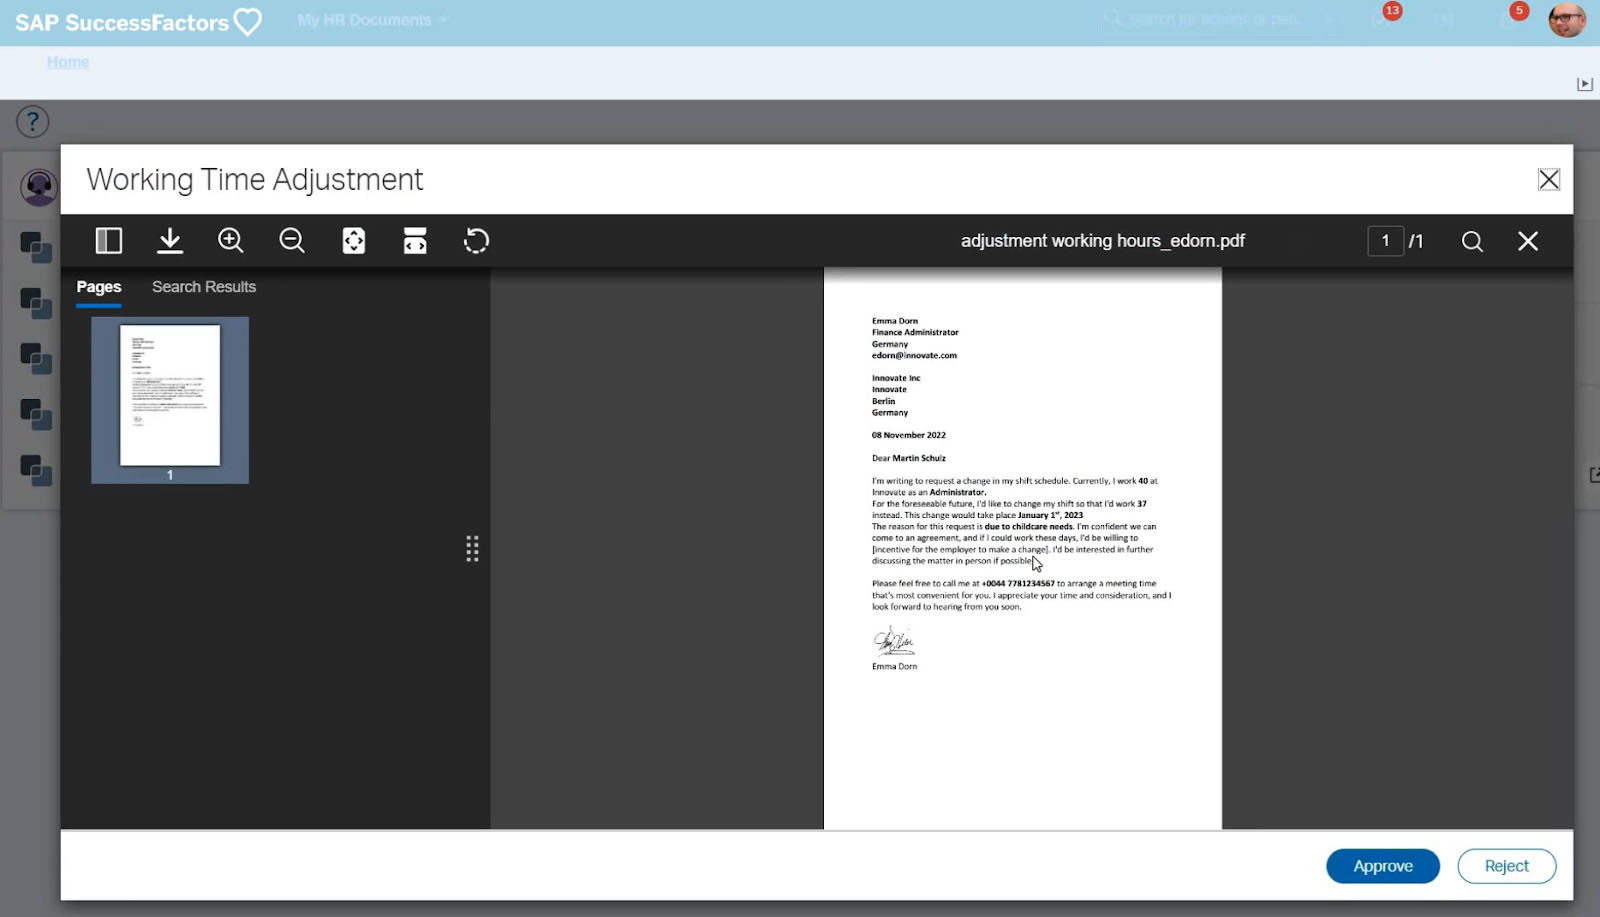 Screenshot of SAP SuccessFactors document management showing approving a document.